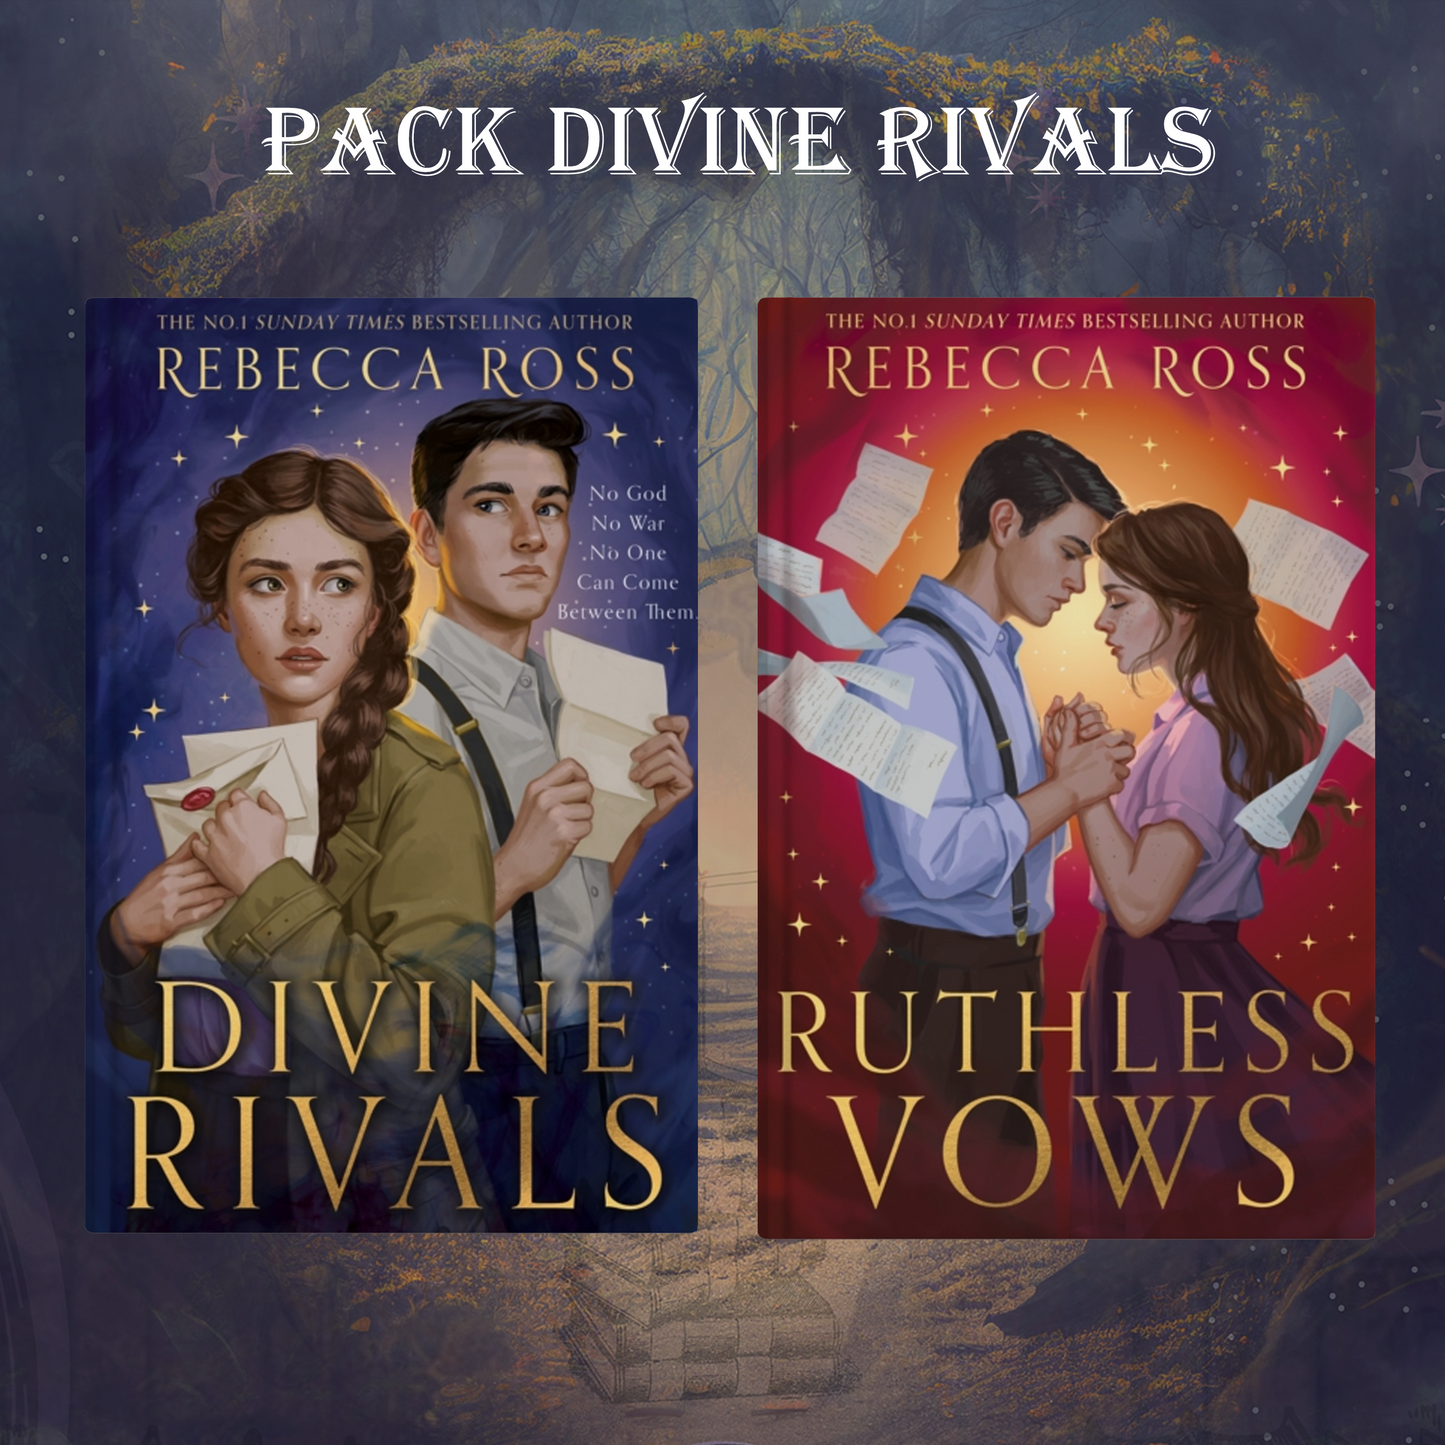 Pack Divine Rivals